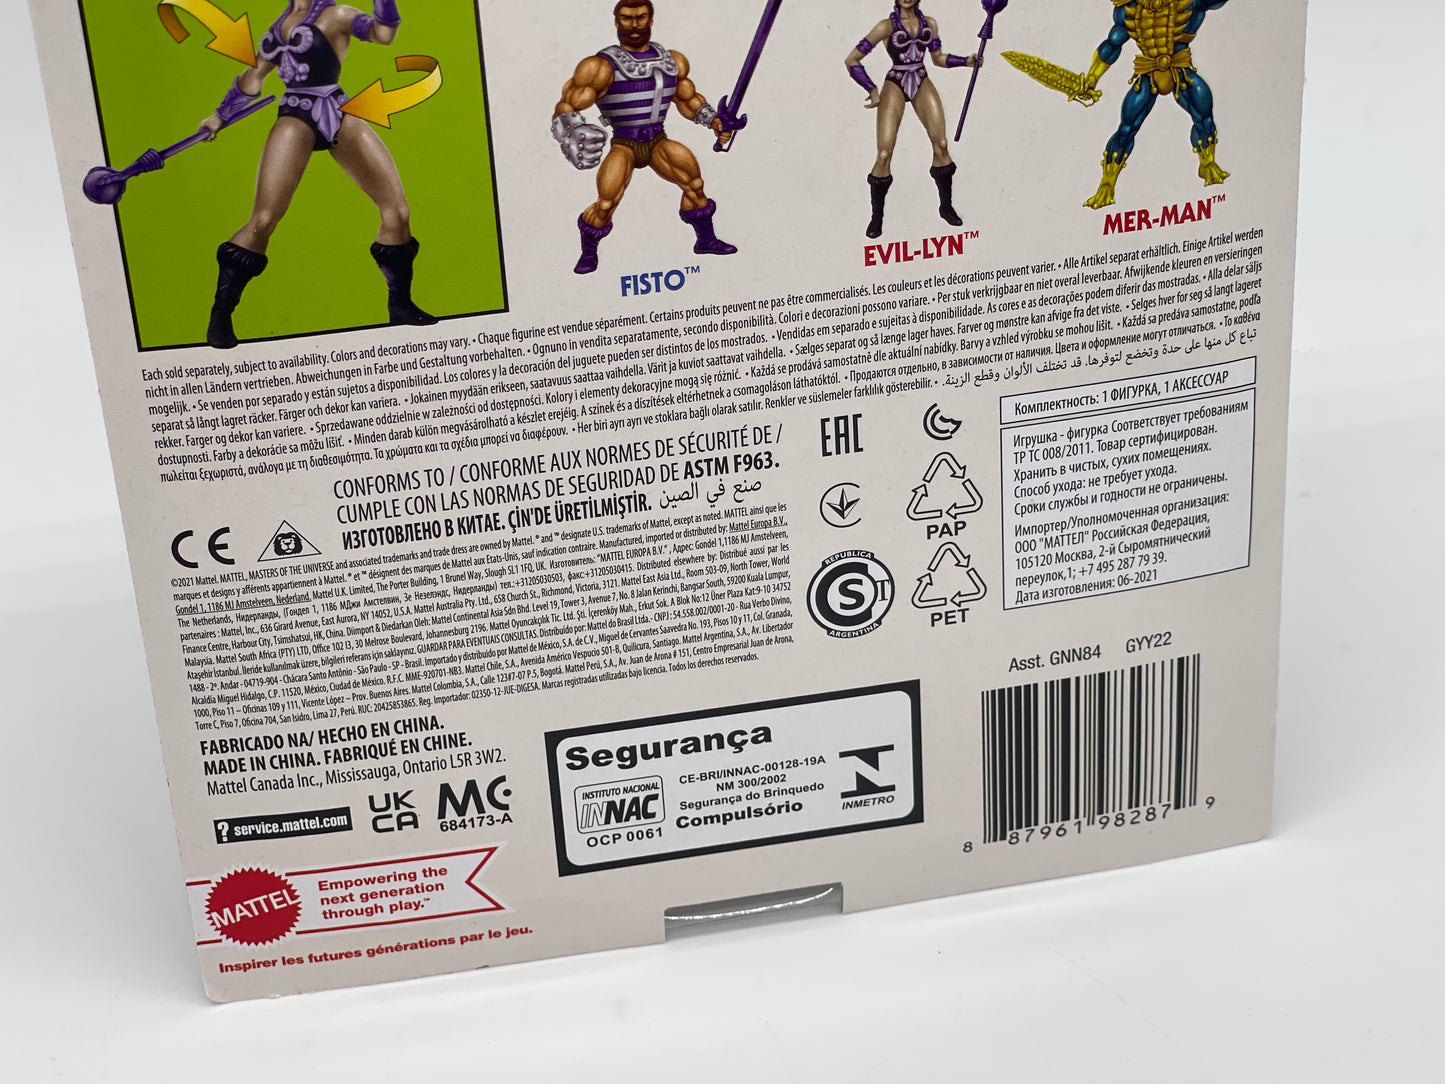 Masters of the Universe Origins "Evil-Lyn 200x" Wave 5, unpunched MOTU (Mattel)